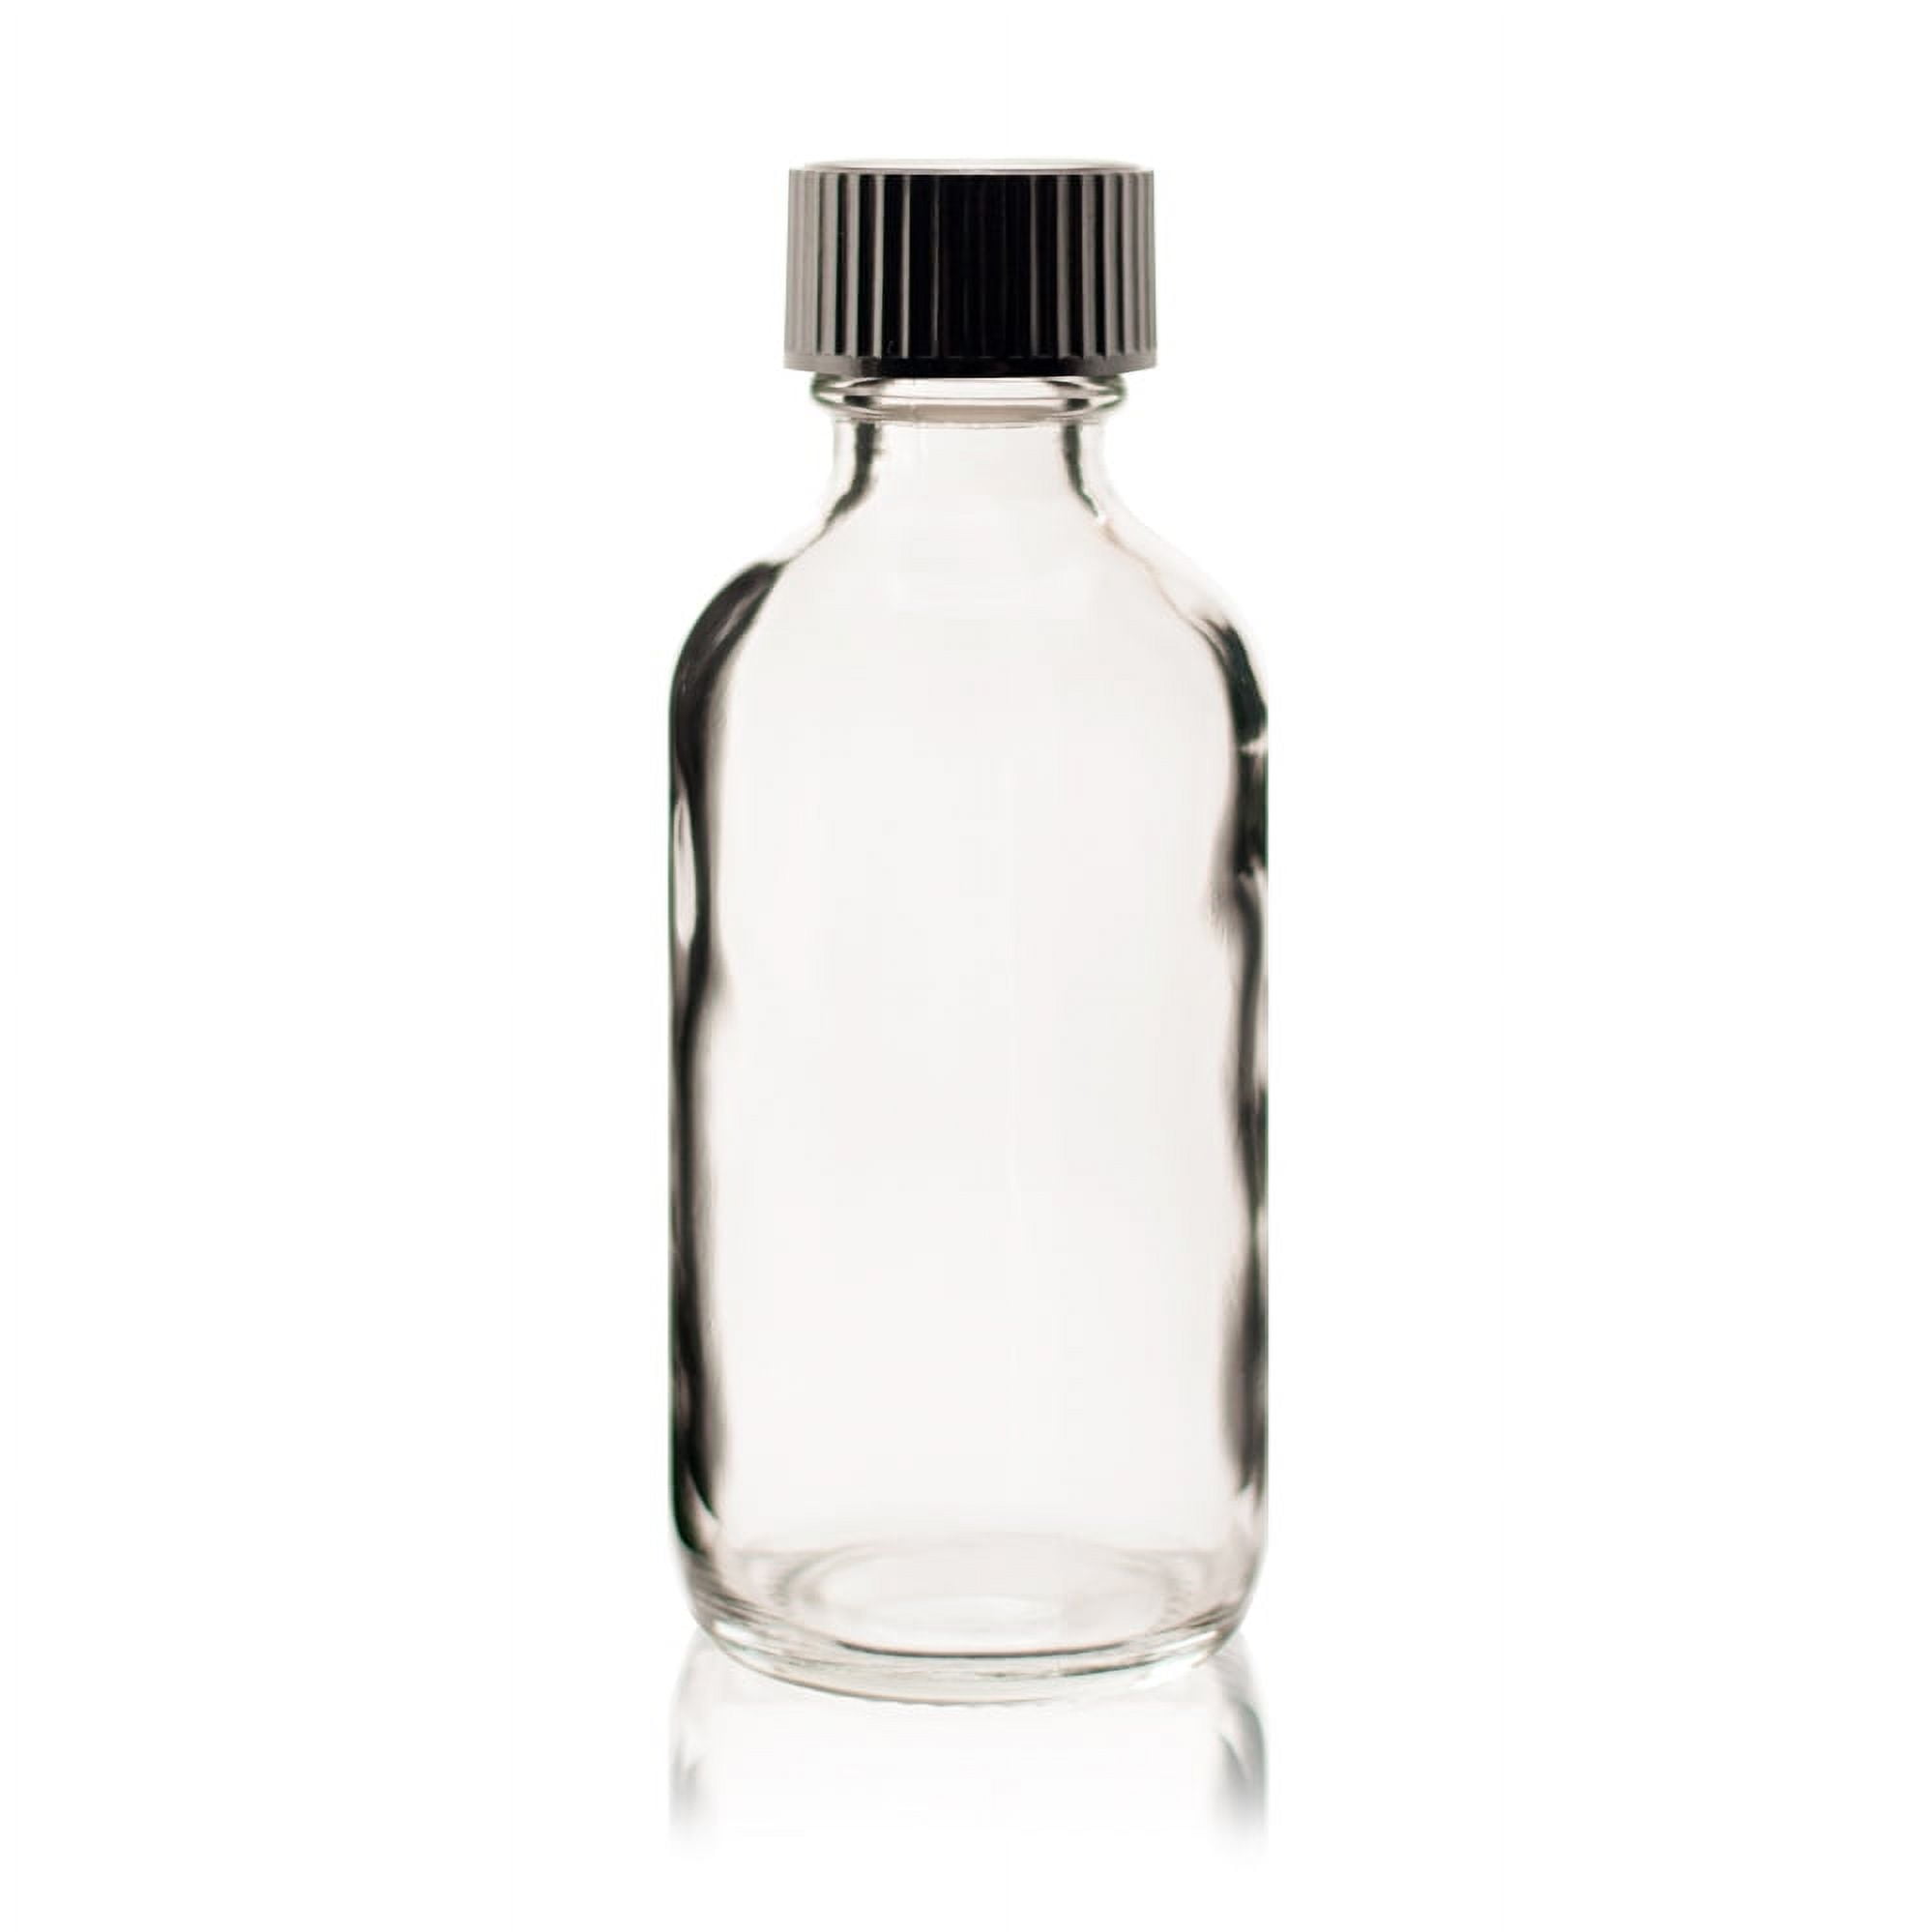 2 oz CLEAR Boston Round Glass Bottle - w/ Poly Seal Cone Cap